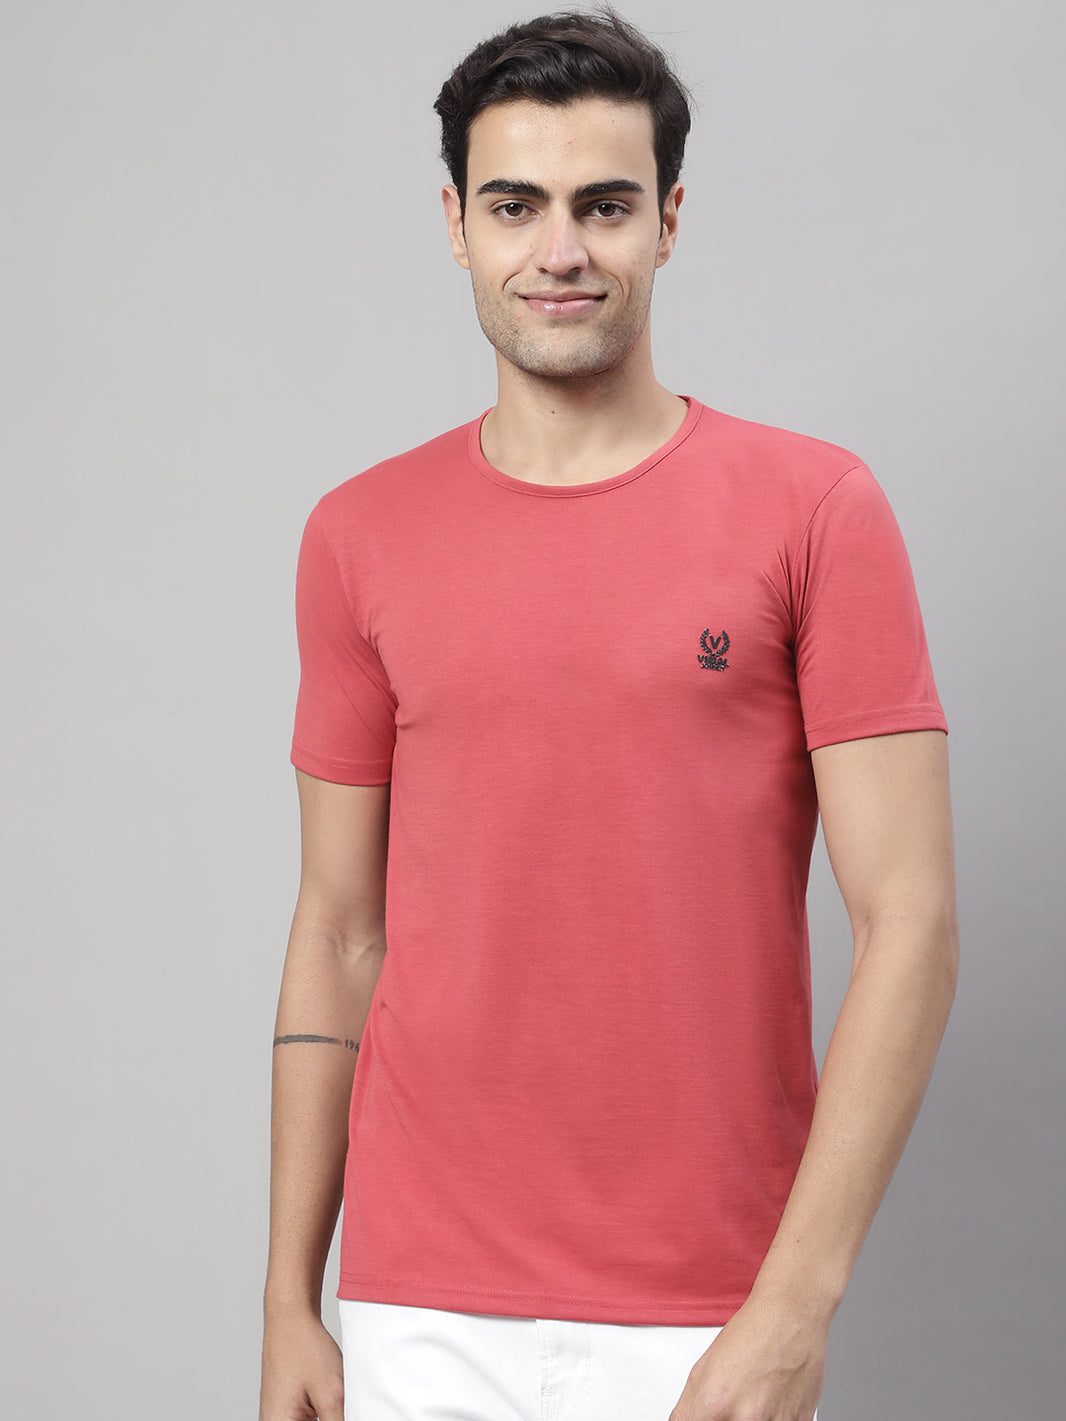 Vimal Jonney Round Neck Cotton Solid Pink T-Shirt for Men